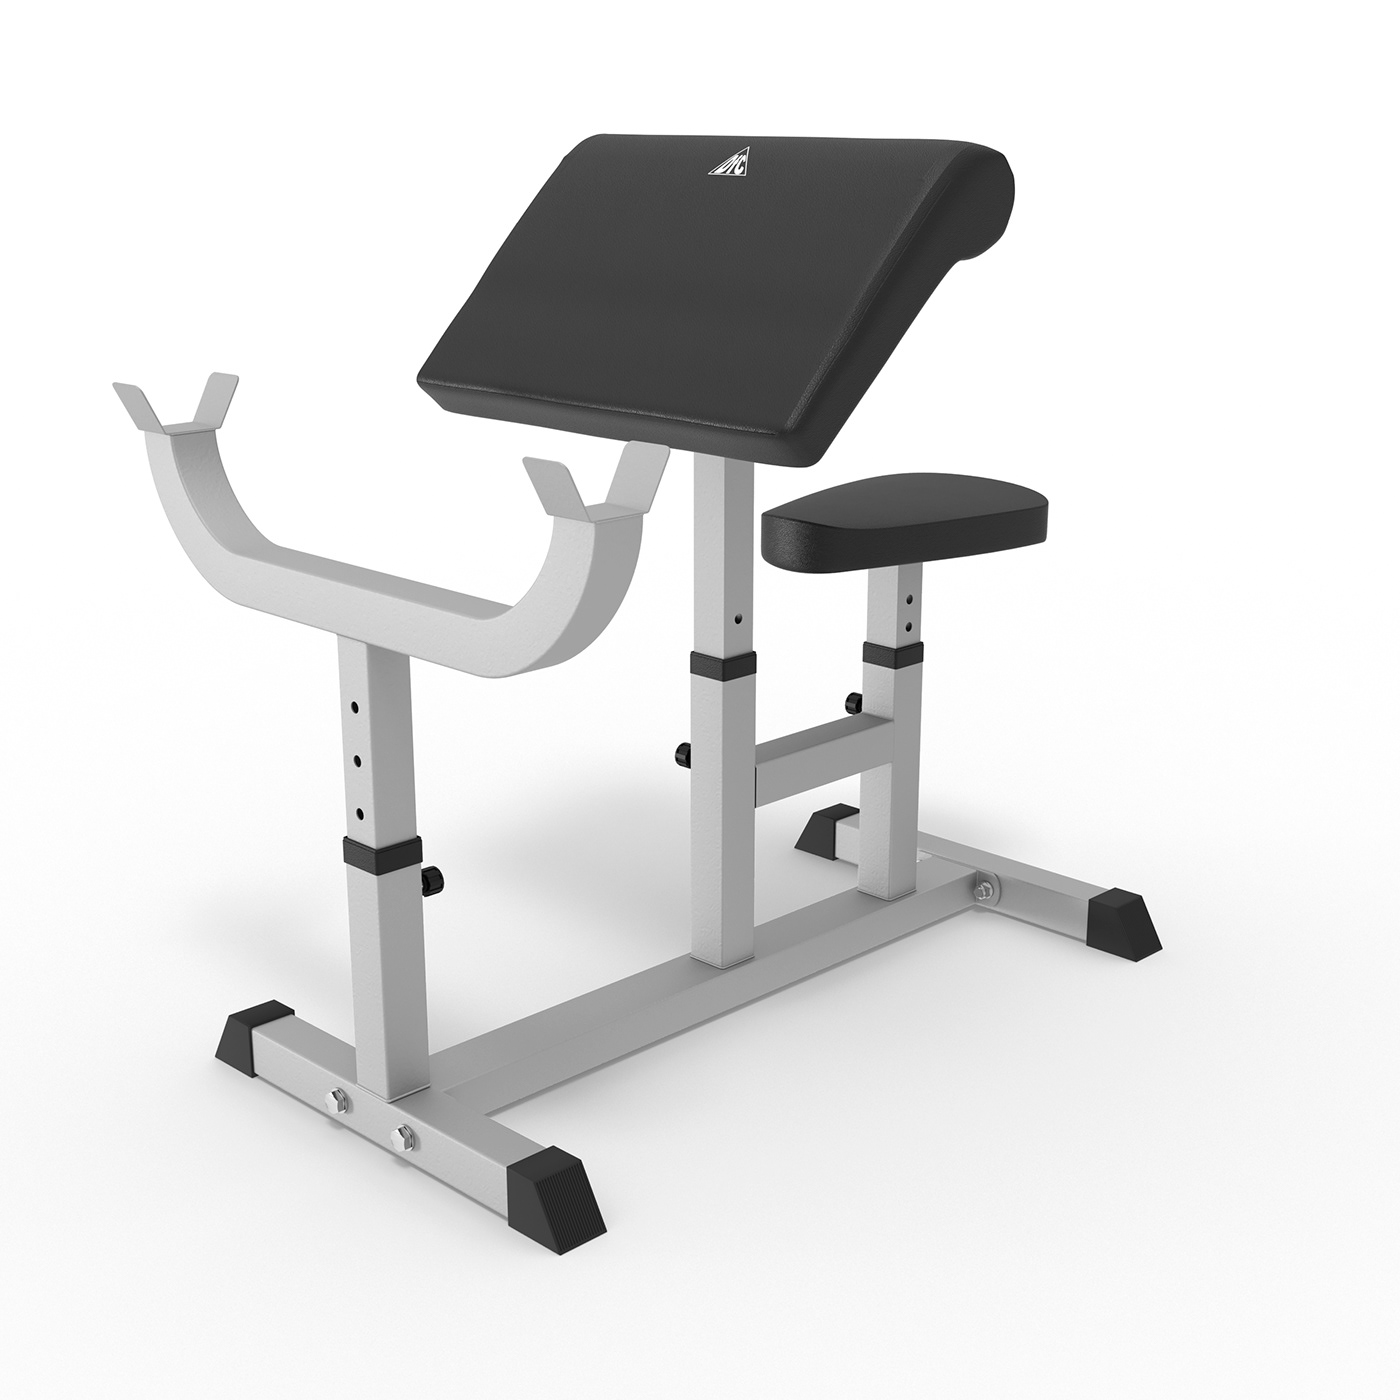 3ds max 3dsmax corona fitness gym product design  Render rendering sport sport design